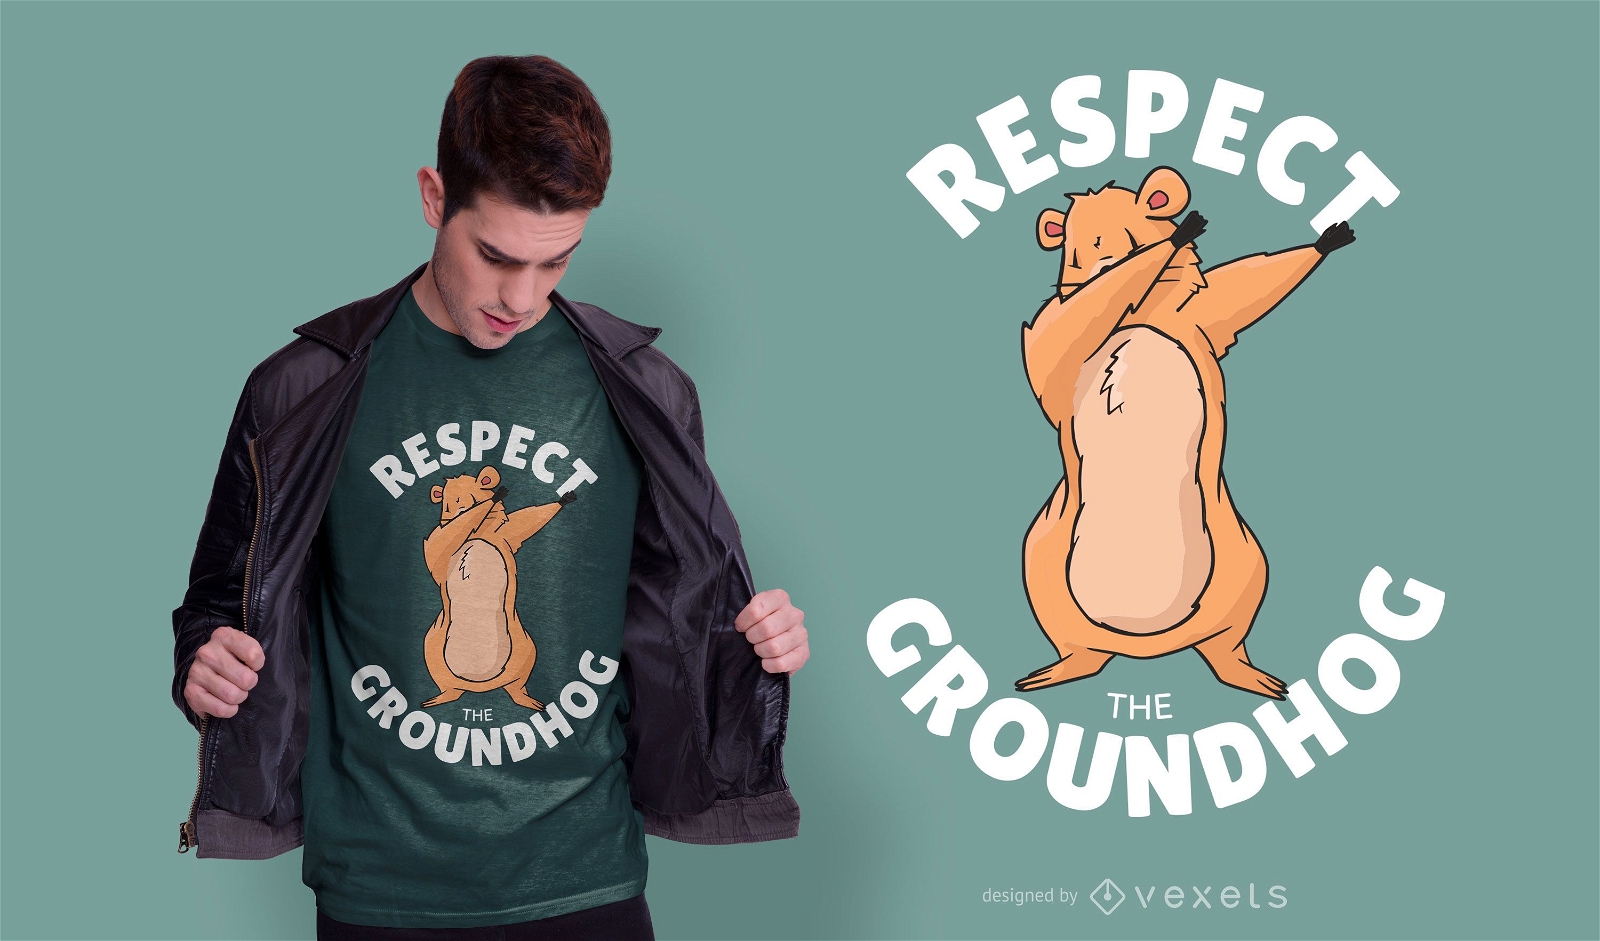 Respect the groundhog t-shirt design